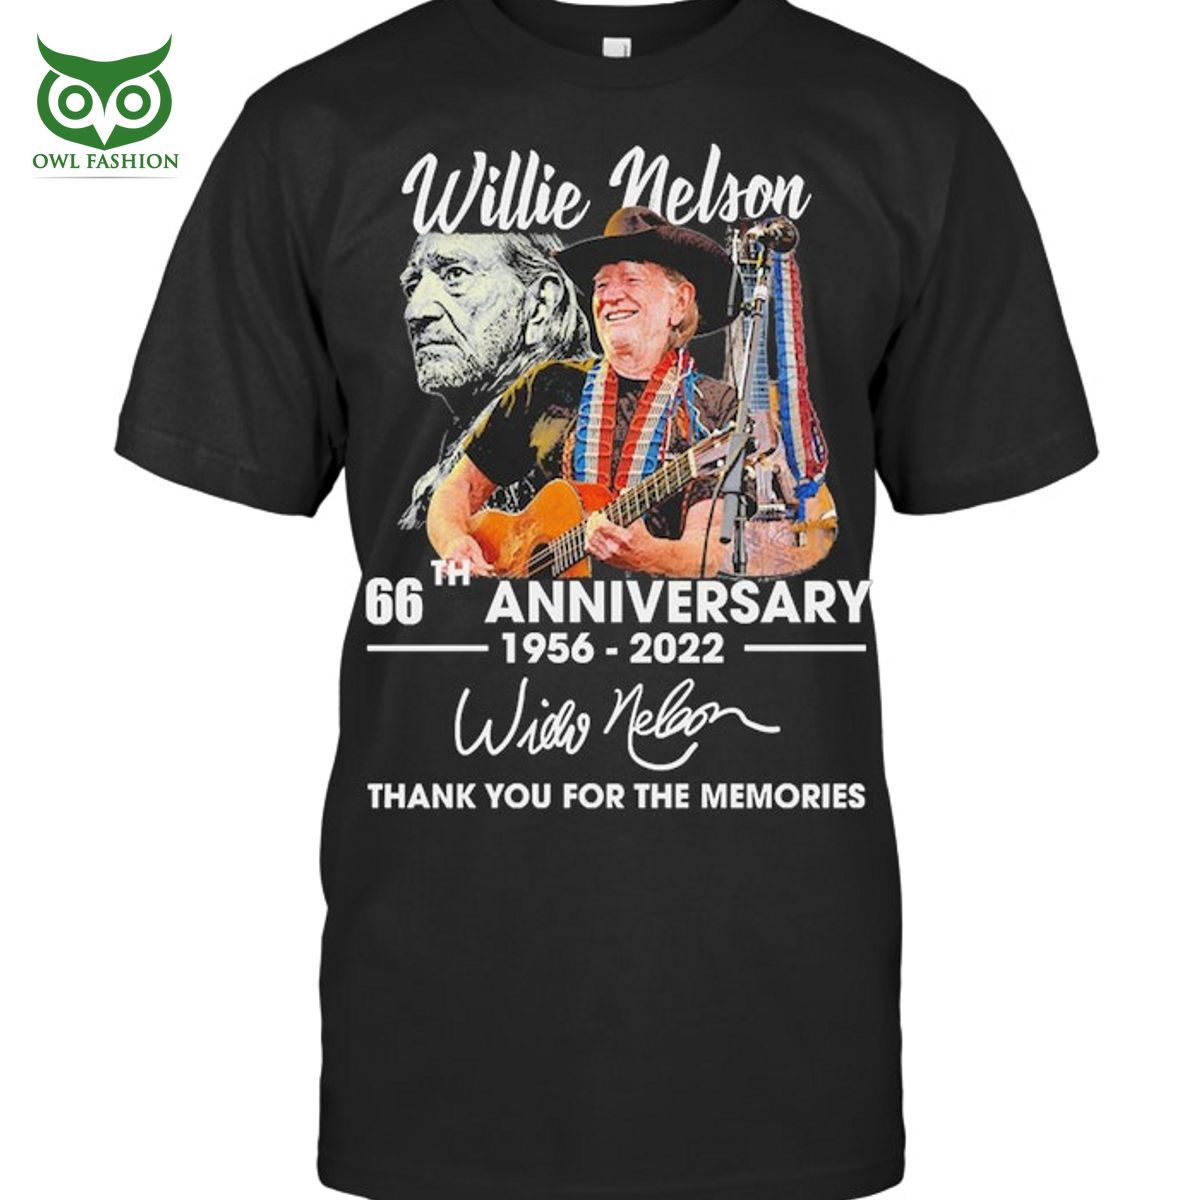 Willie Nelson Legend Singer 66th Anniversary Memories 2D shirt Amazing Pic